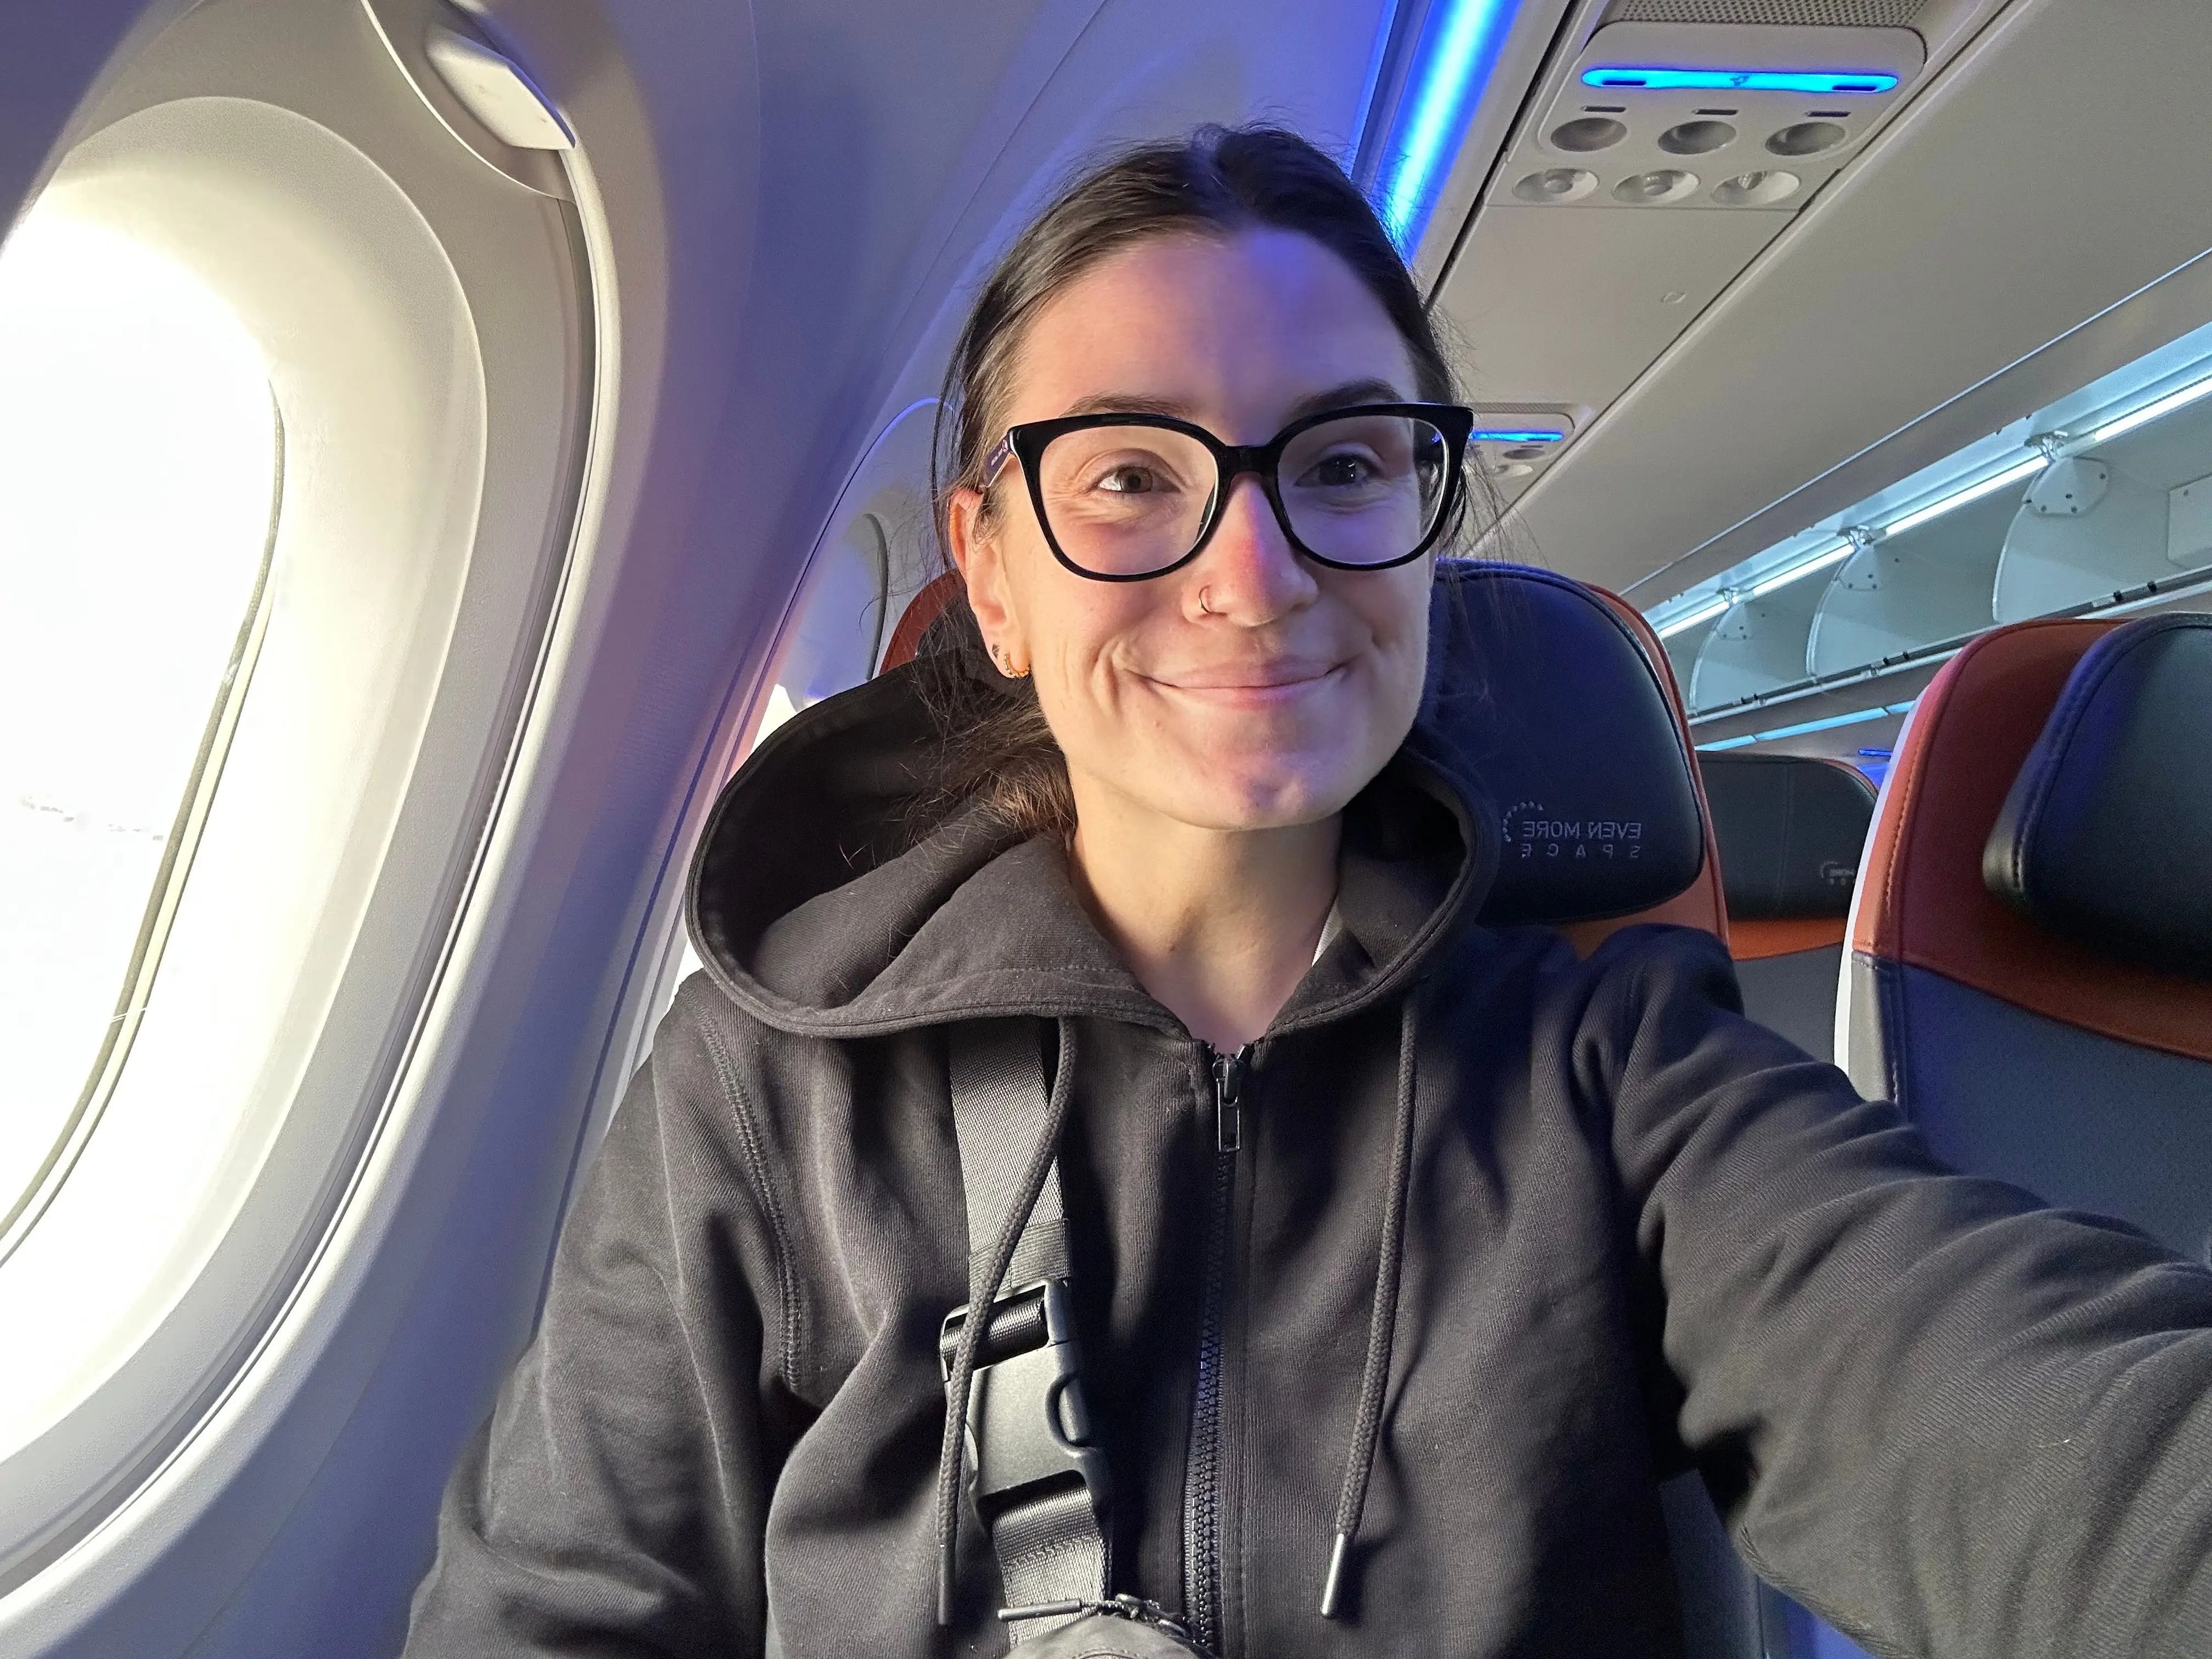 Insider's reporter in an Even More Space seat on JetBlue's transatlantic flight.